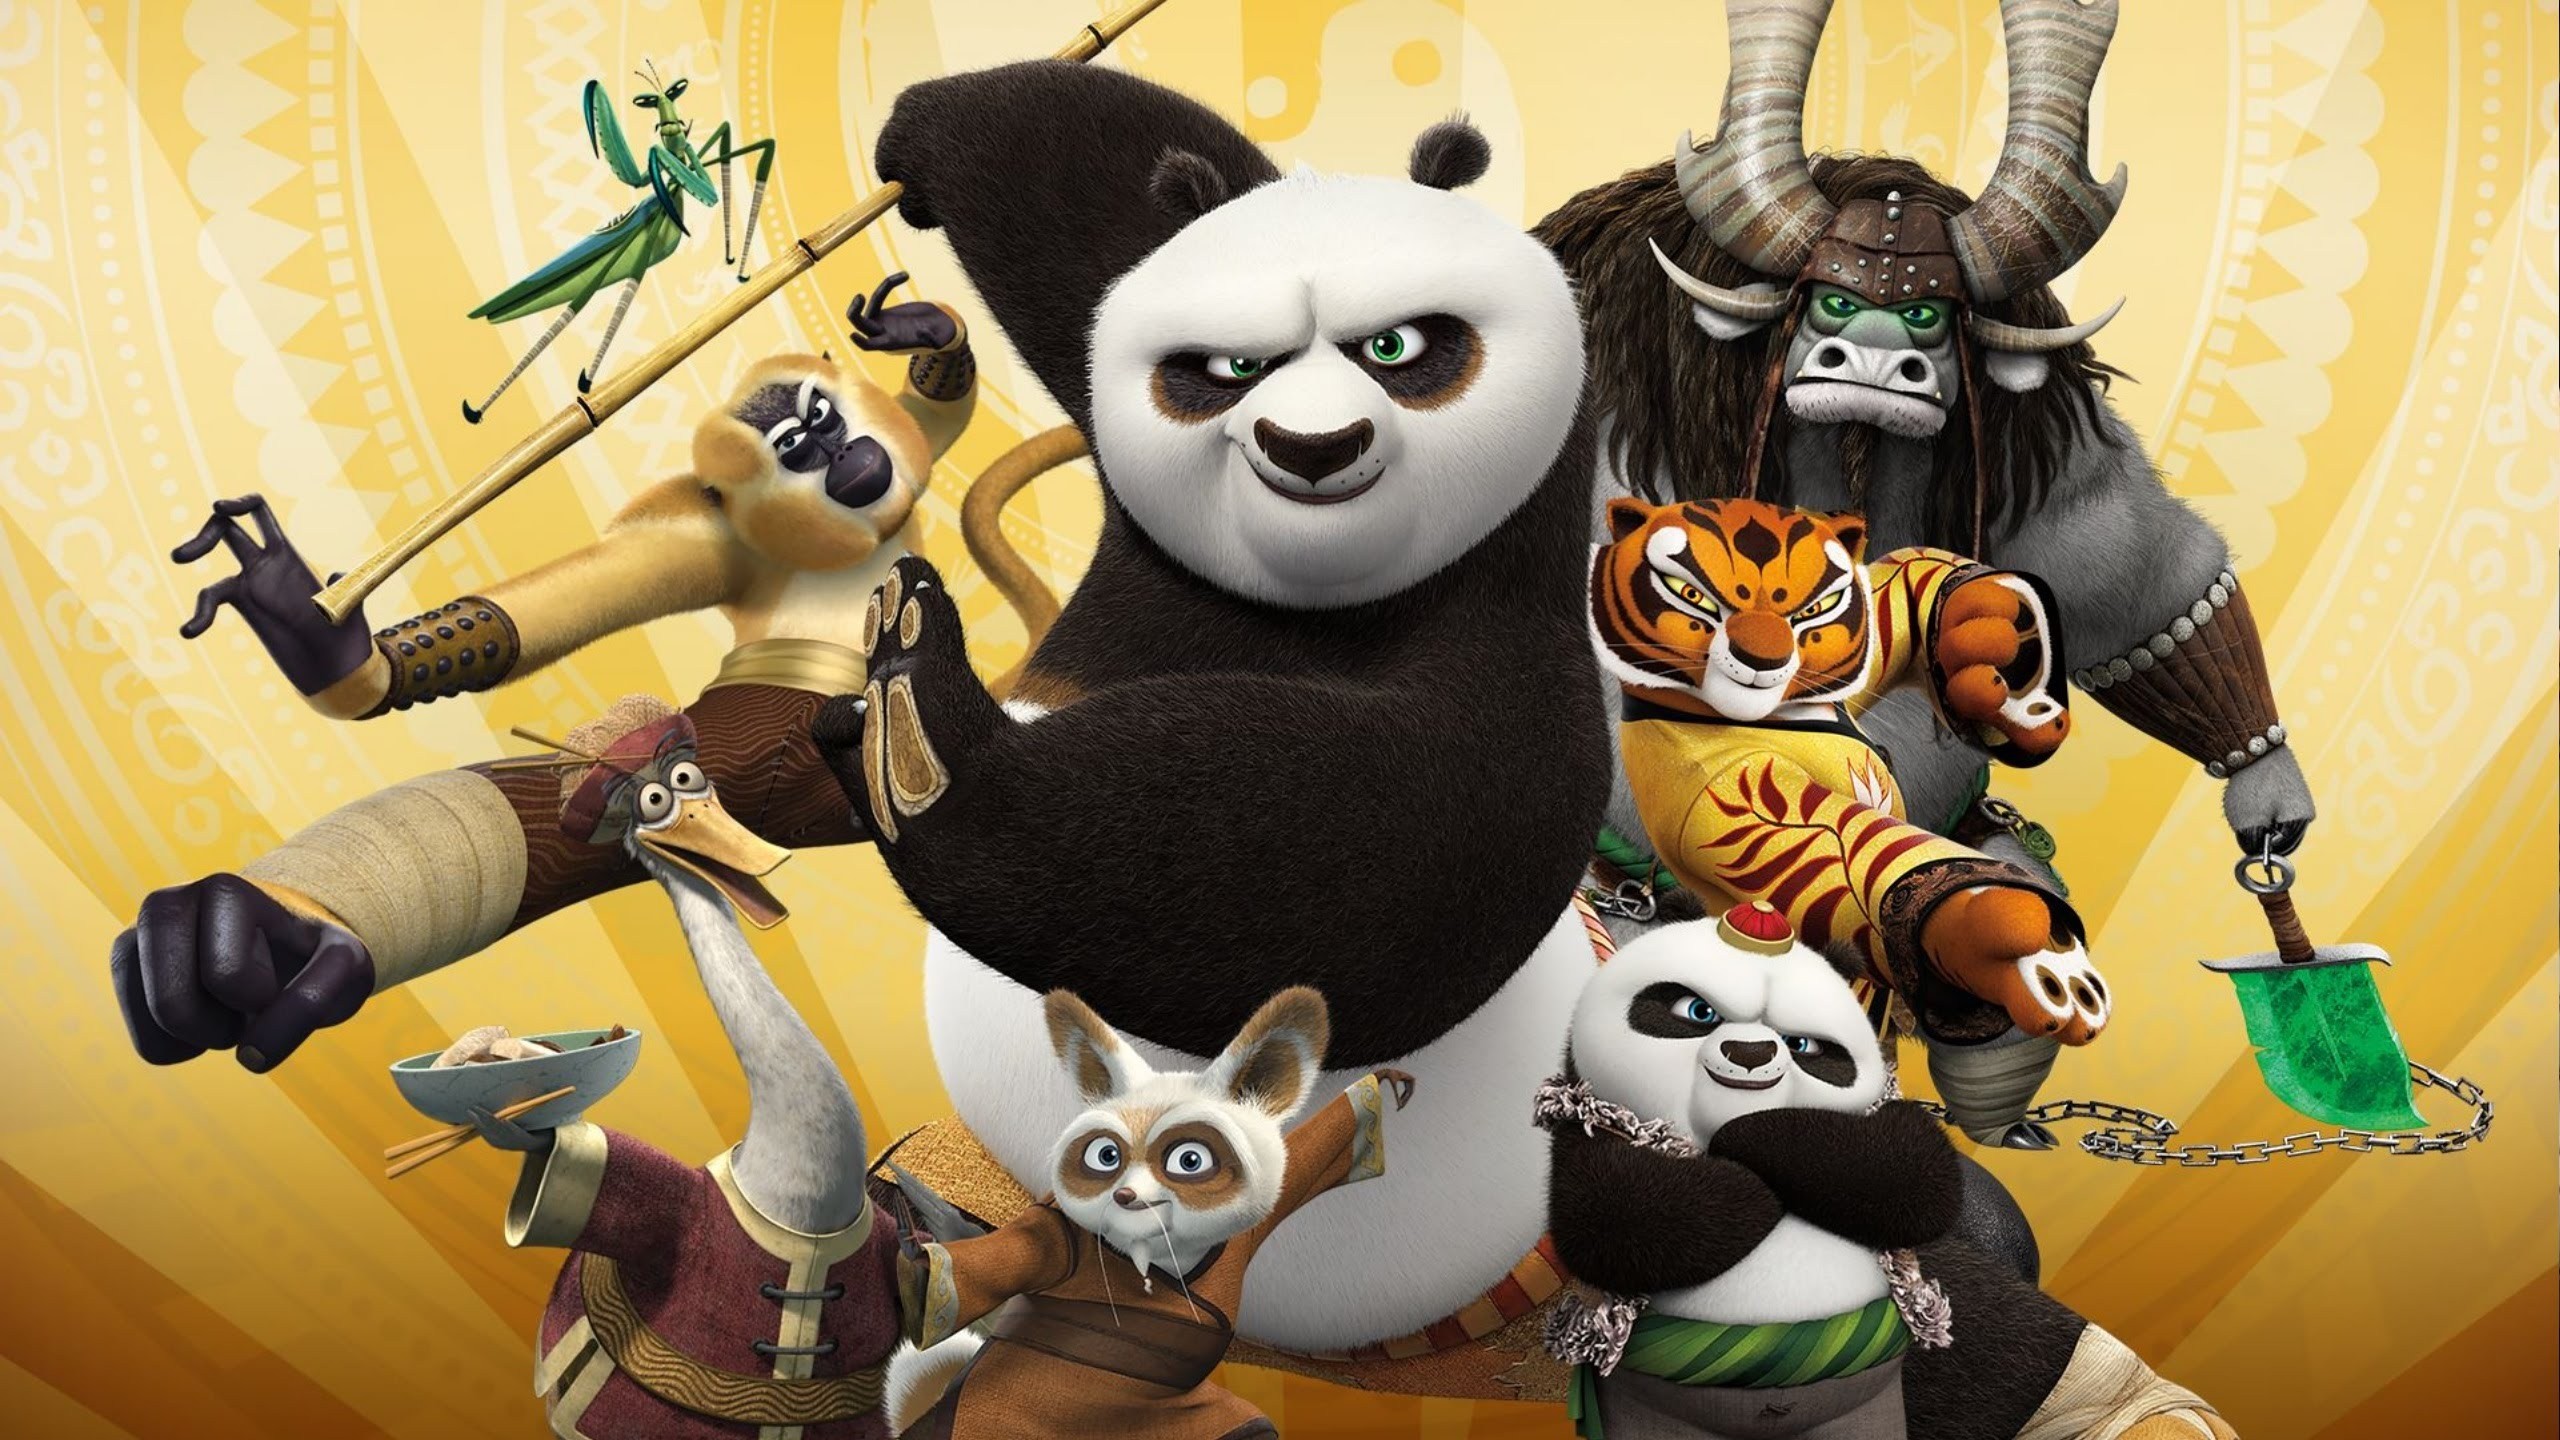 2560x1440 Kung Fu Panda Wallpapers High Quality Free